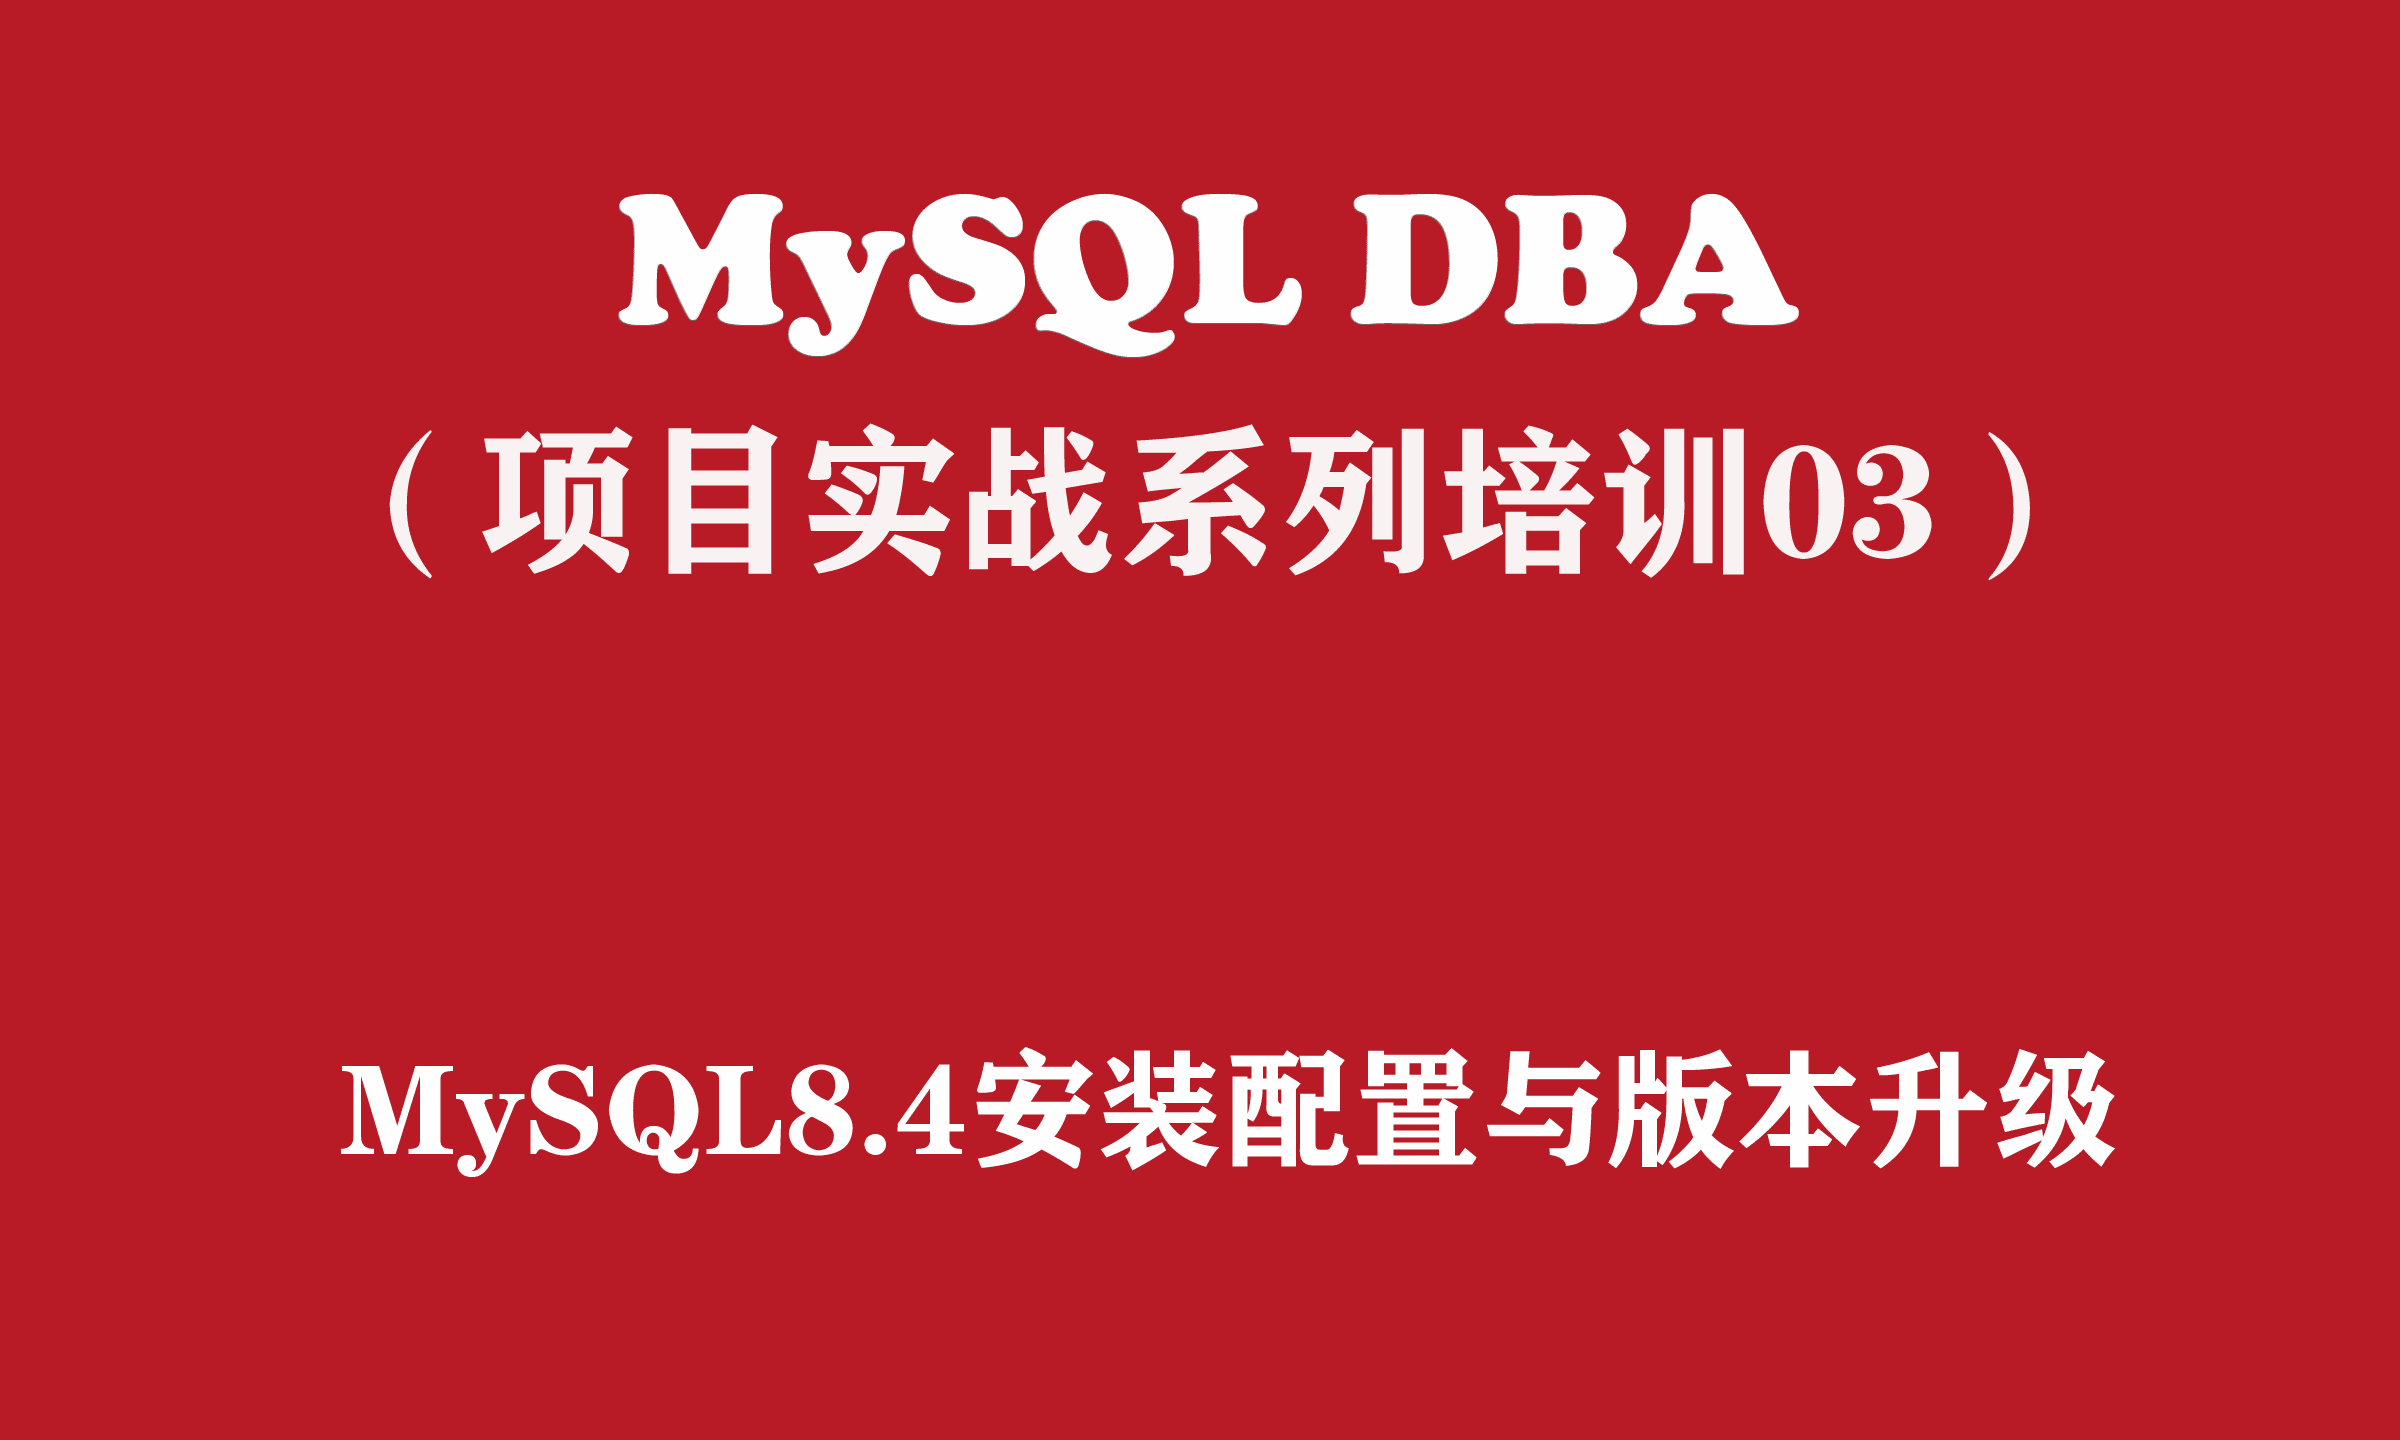 MySQL8.4安装配置与版本升级【MySQL DBA实战培训系列03】